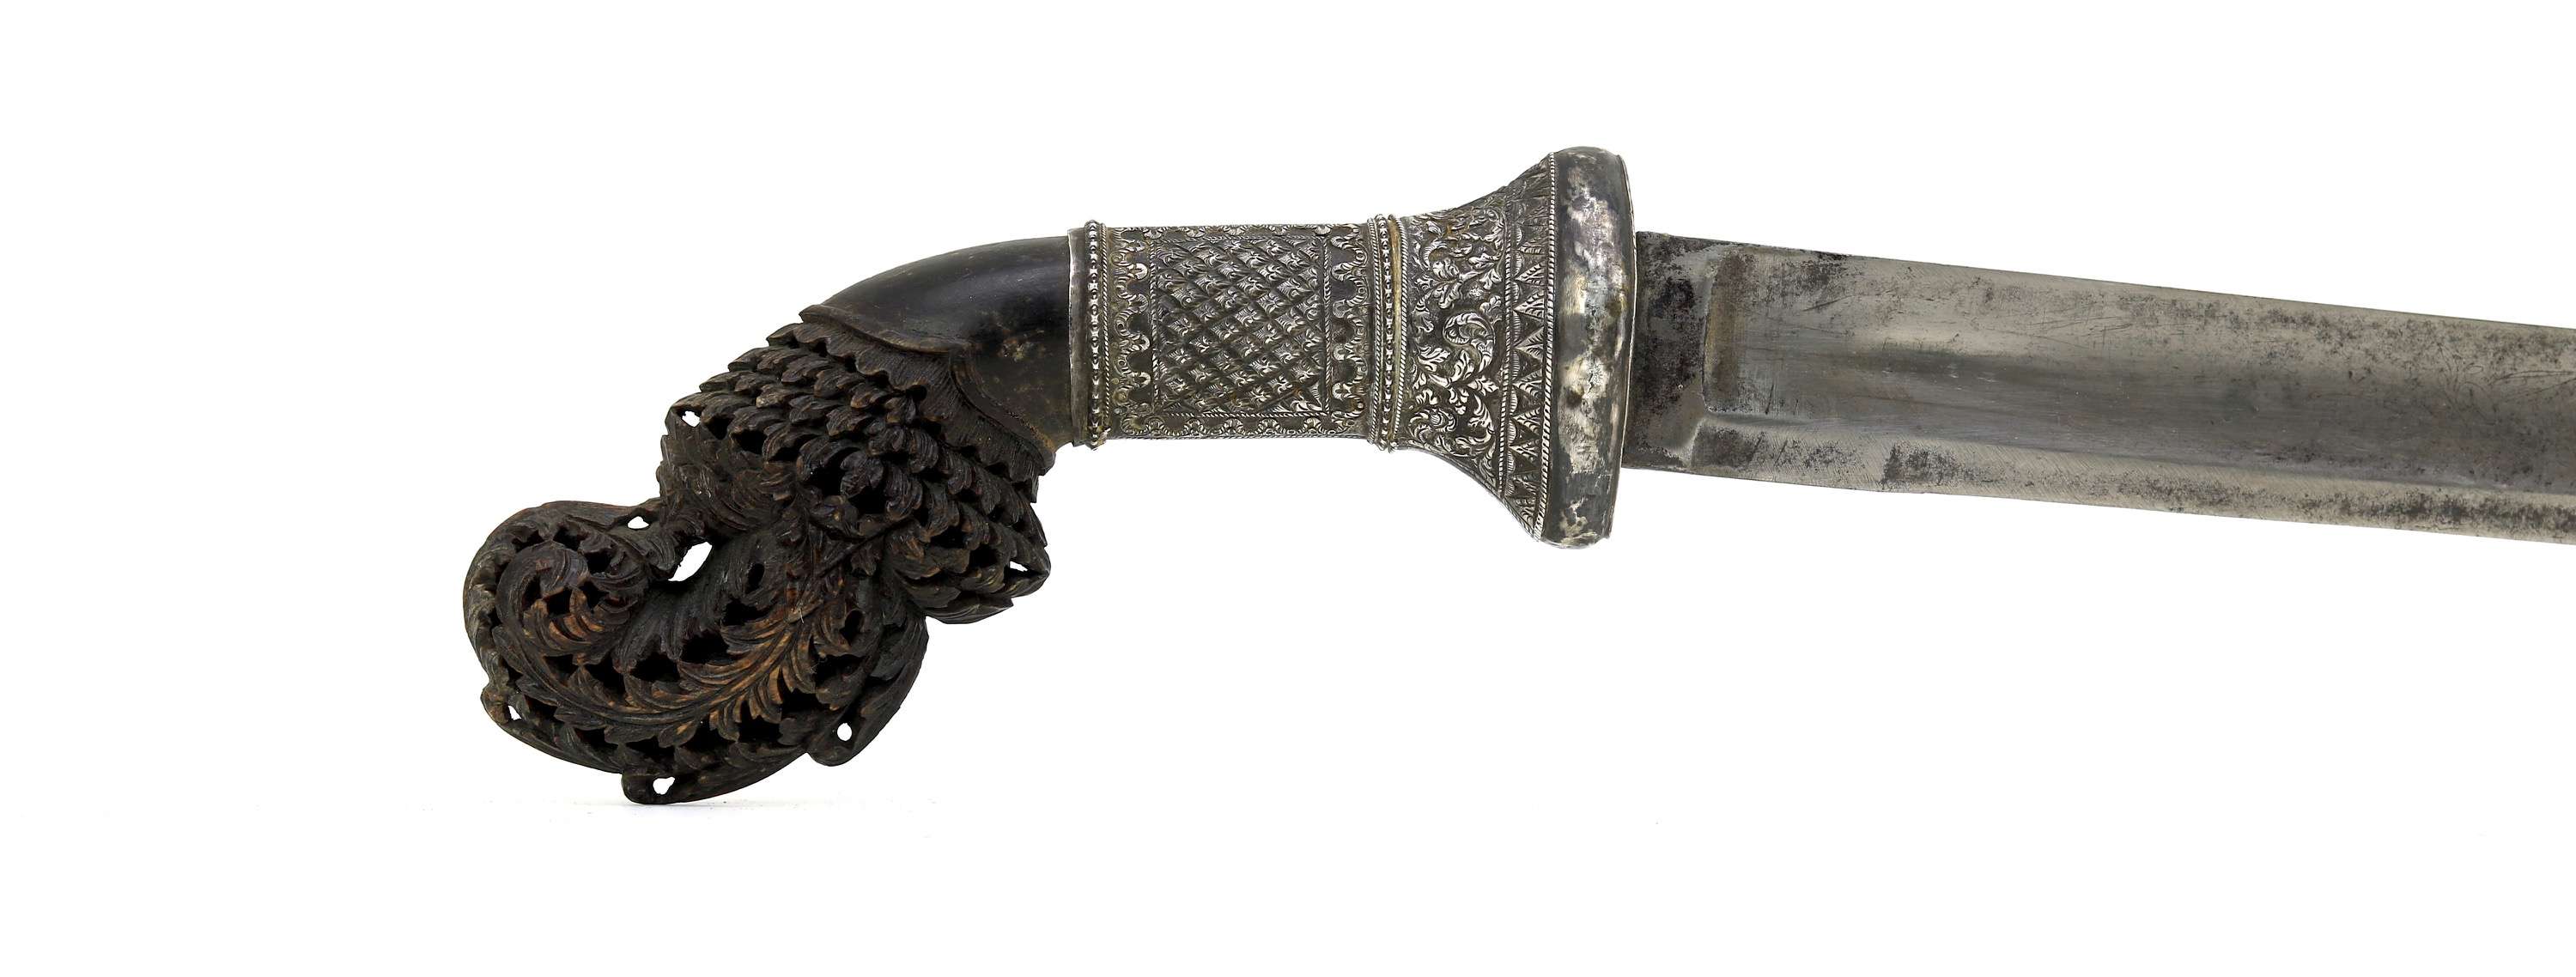 British 1796 heavy cavalry sword with Sumatran Palembang style hilt